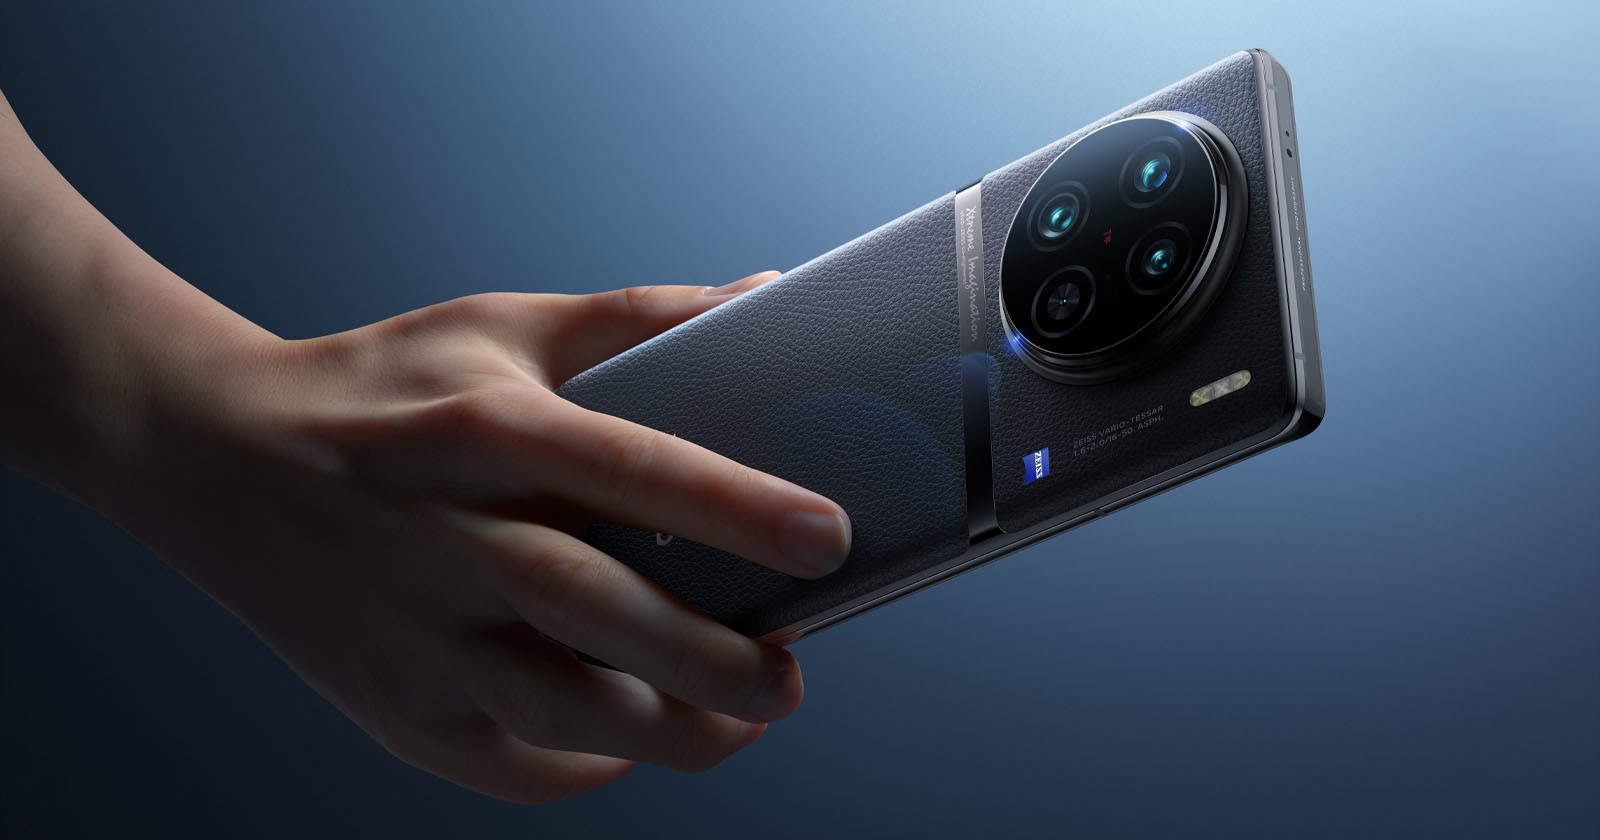  vivo x90 series smartphones are co-engineered 